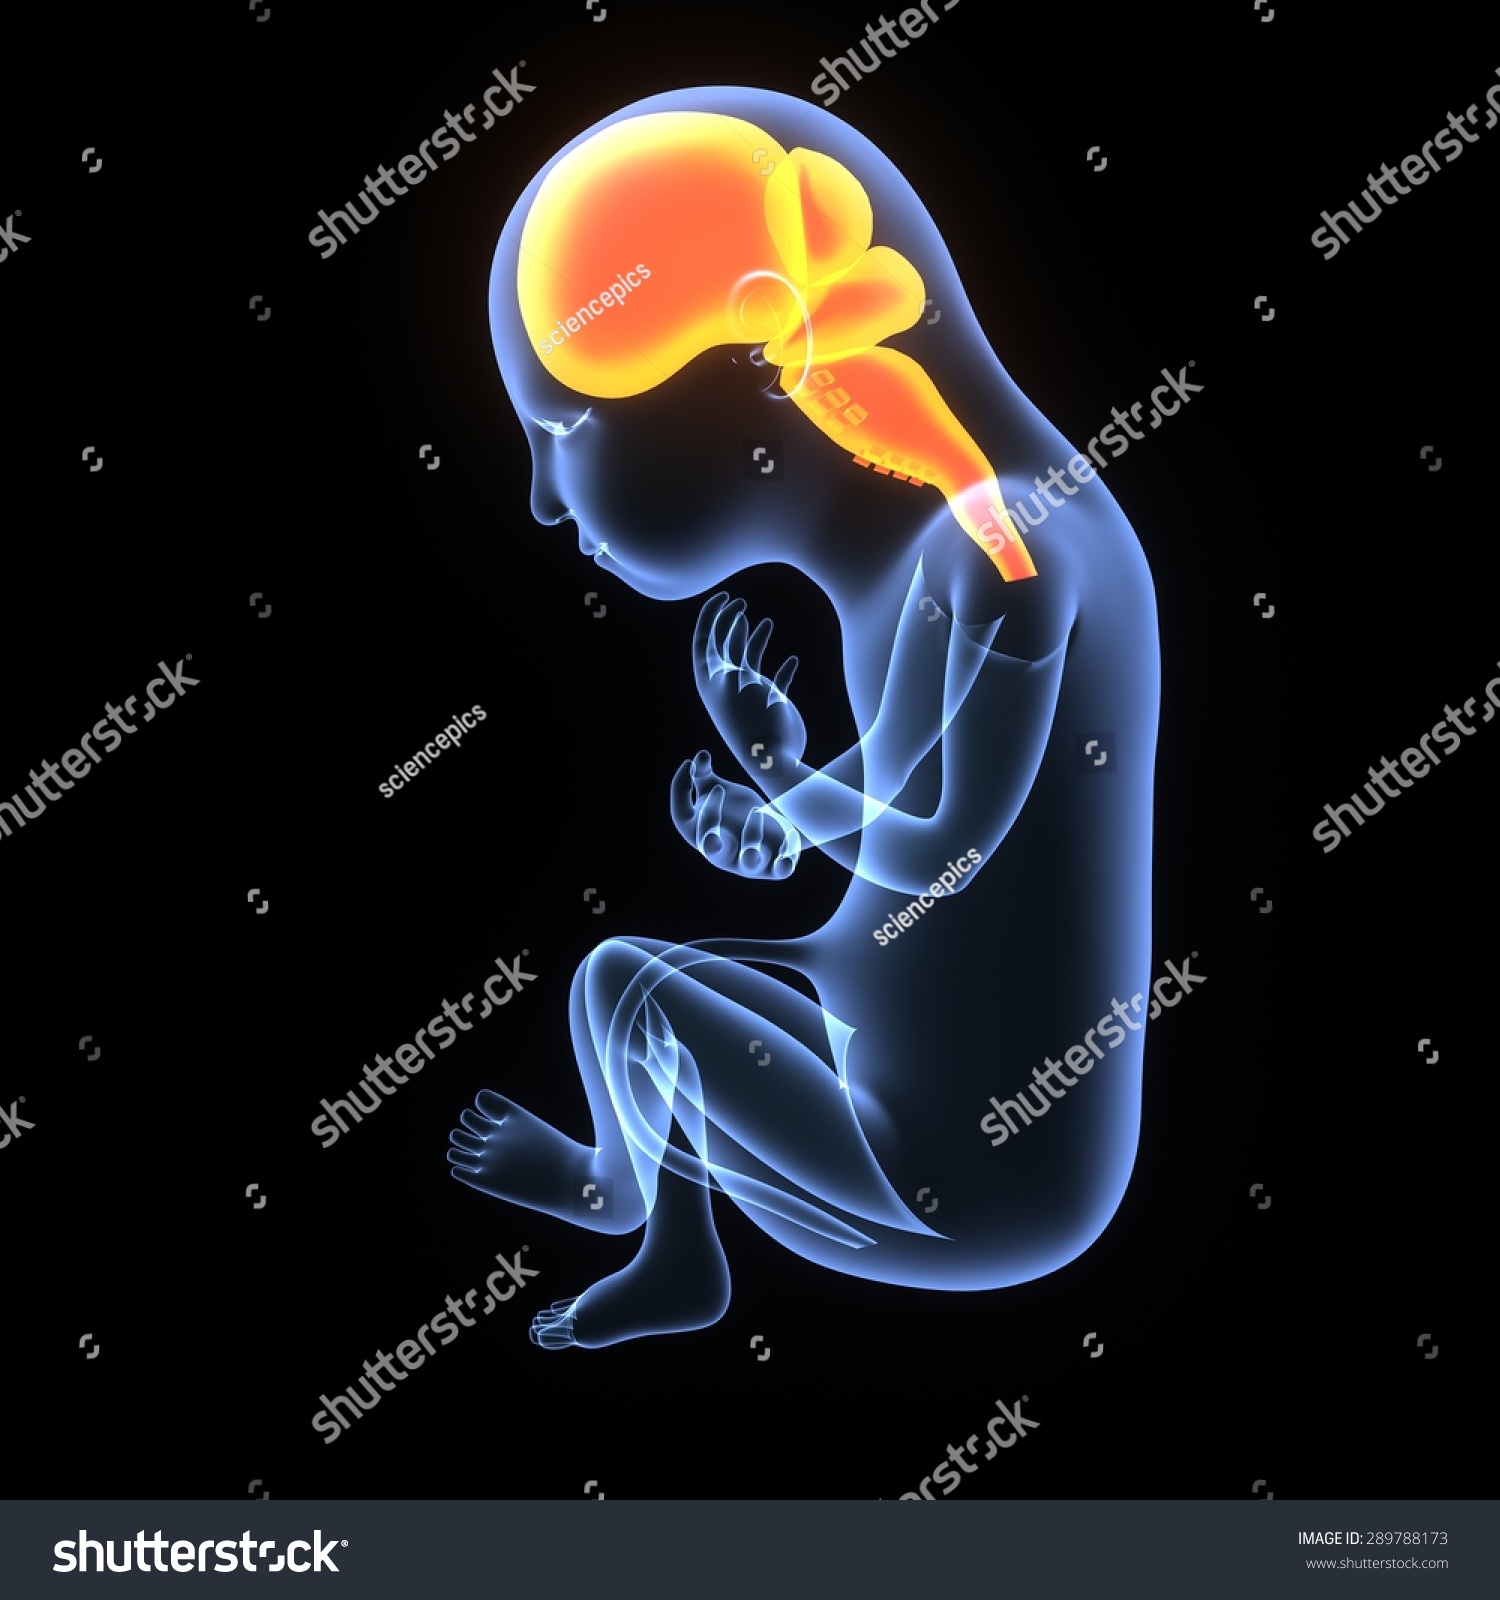 Fetal Development Of Human Brain Stock Photo 289788173 : Shutterstock